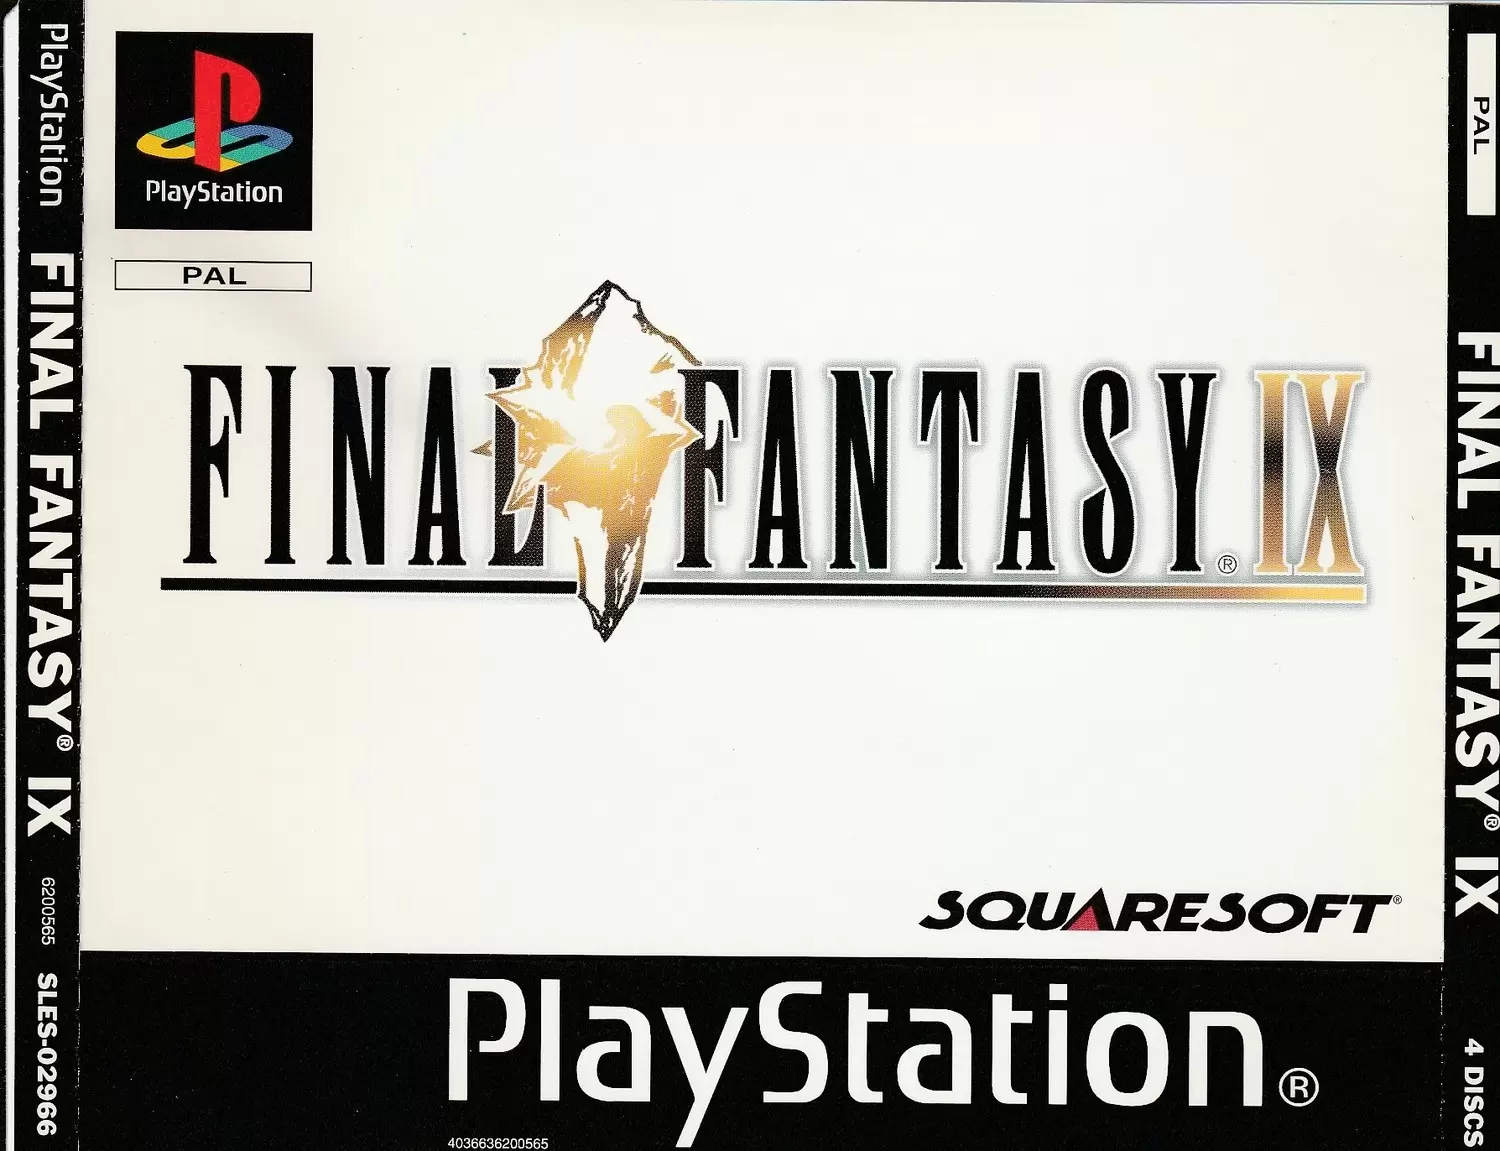 Playstation games - Final Fantasy IX